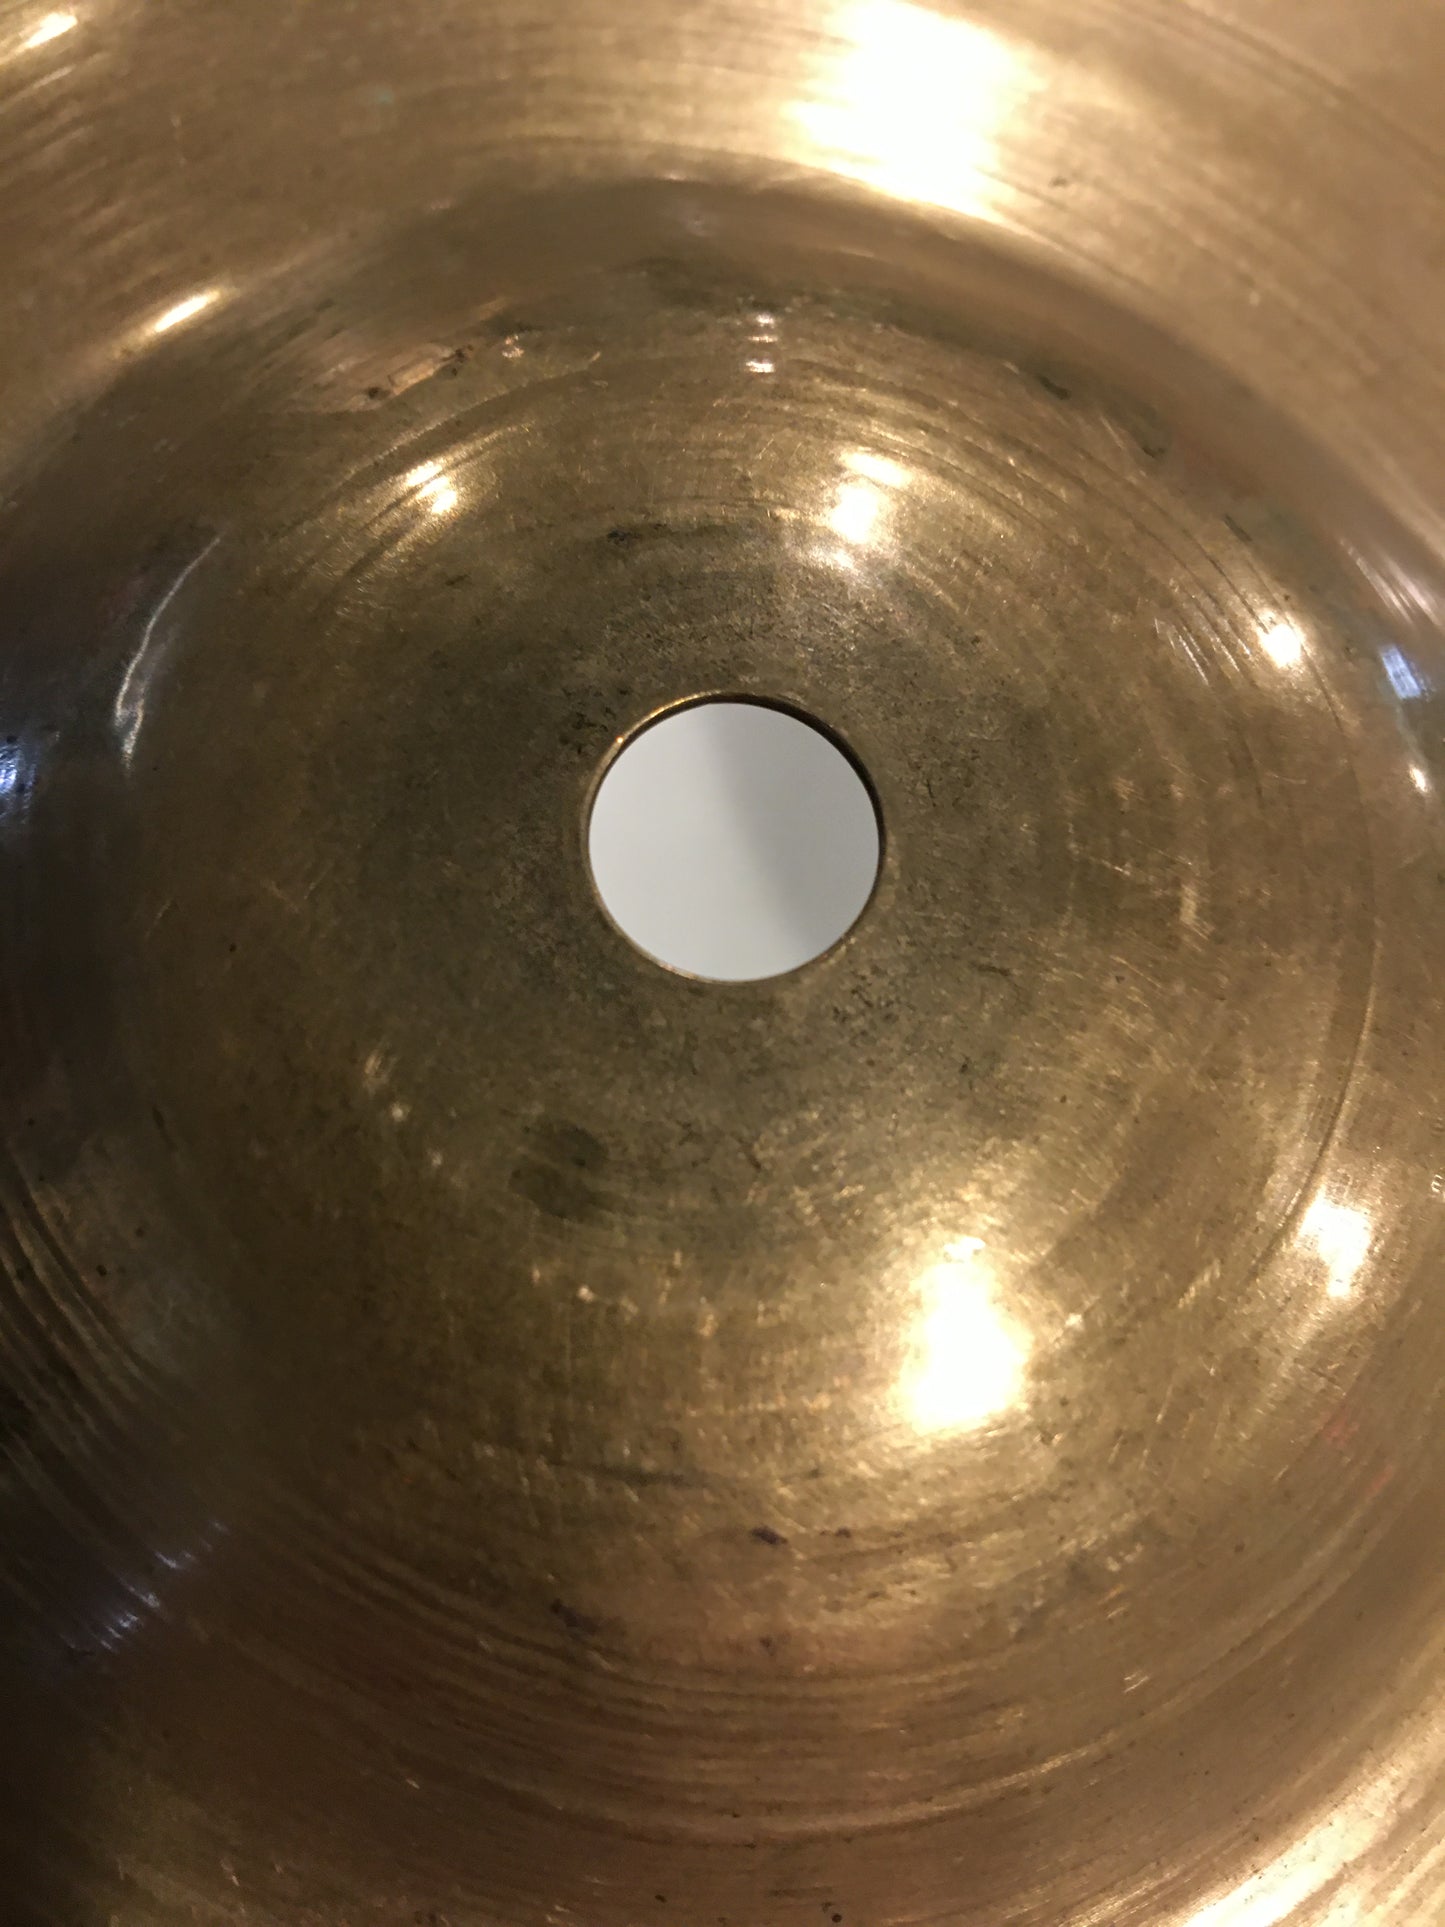 13" K. Zildjian Constantinople Small Ride Cymbal 892g #53